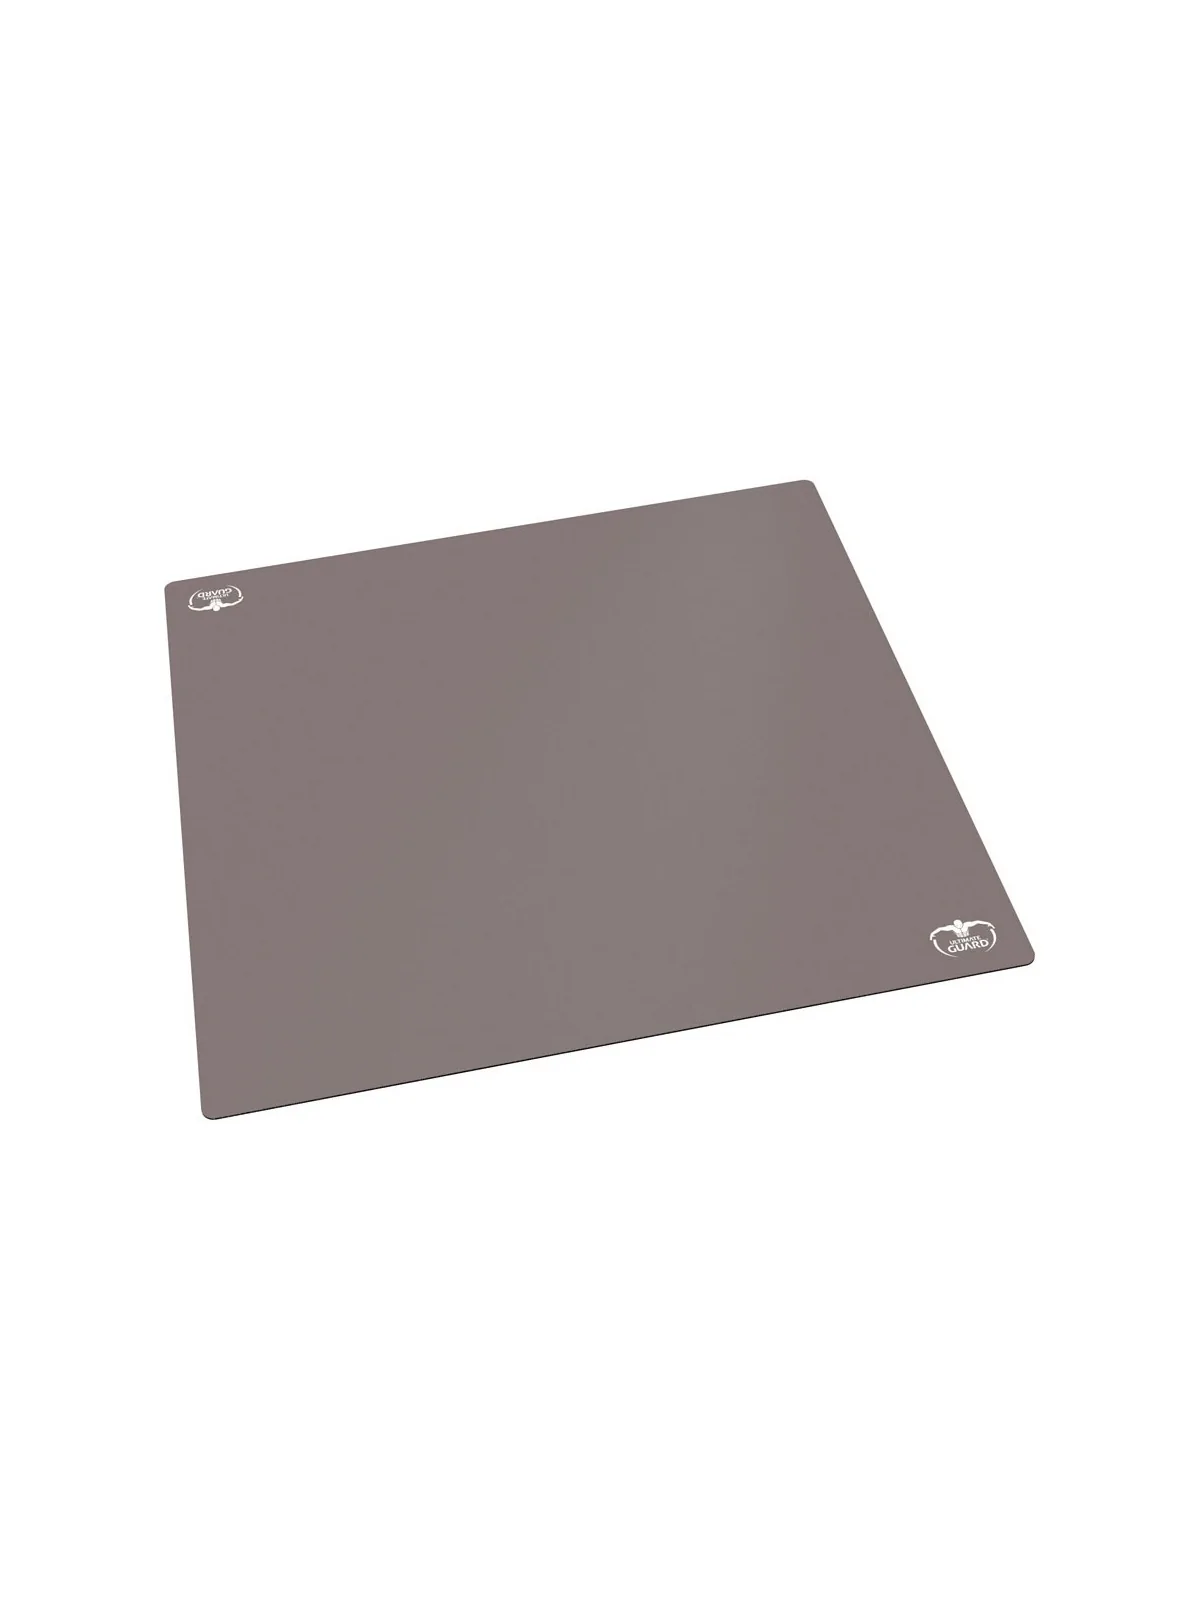 Comprar Ultimate Guard Tapete 60 Monochrome Beige Oscuro 61 x 61 cm ba